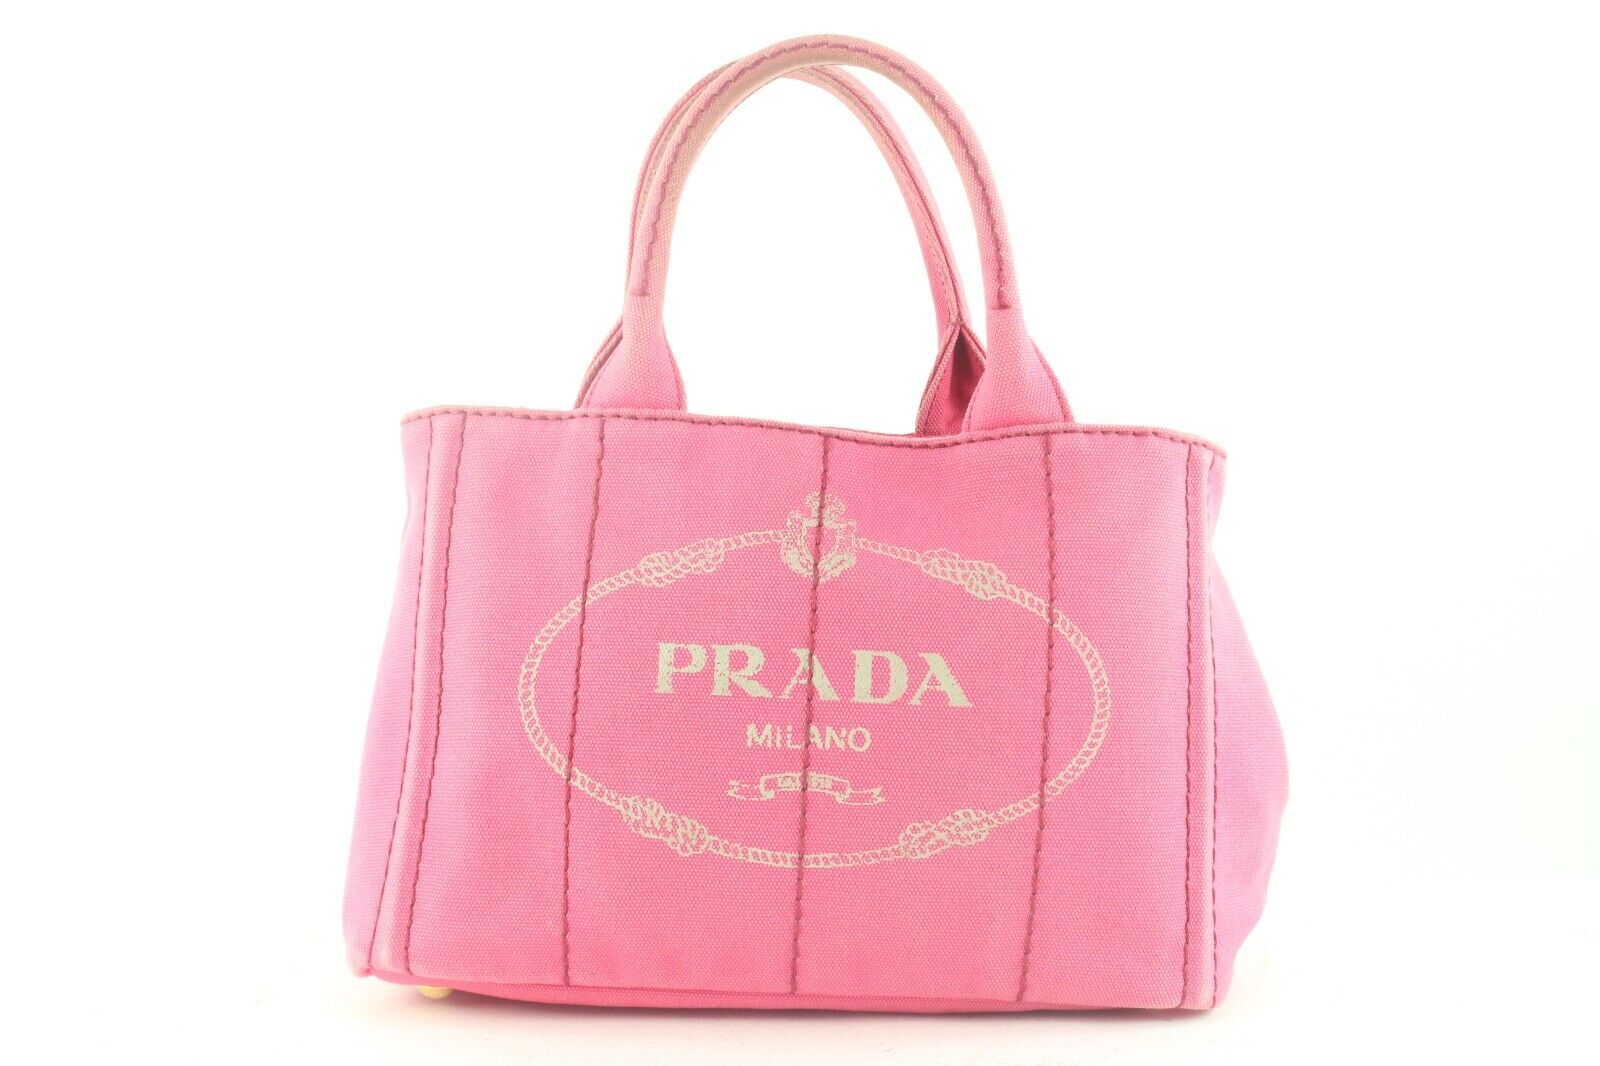 Download free Prada Milano Purse Pink Wallpaper - MrWallpaper.com